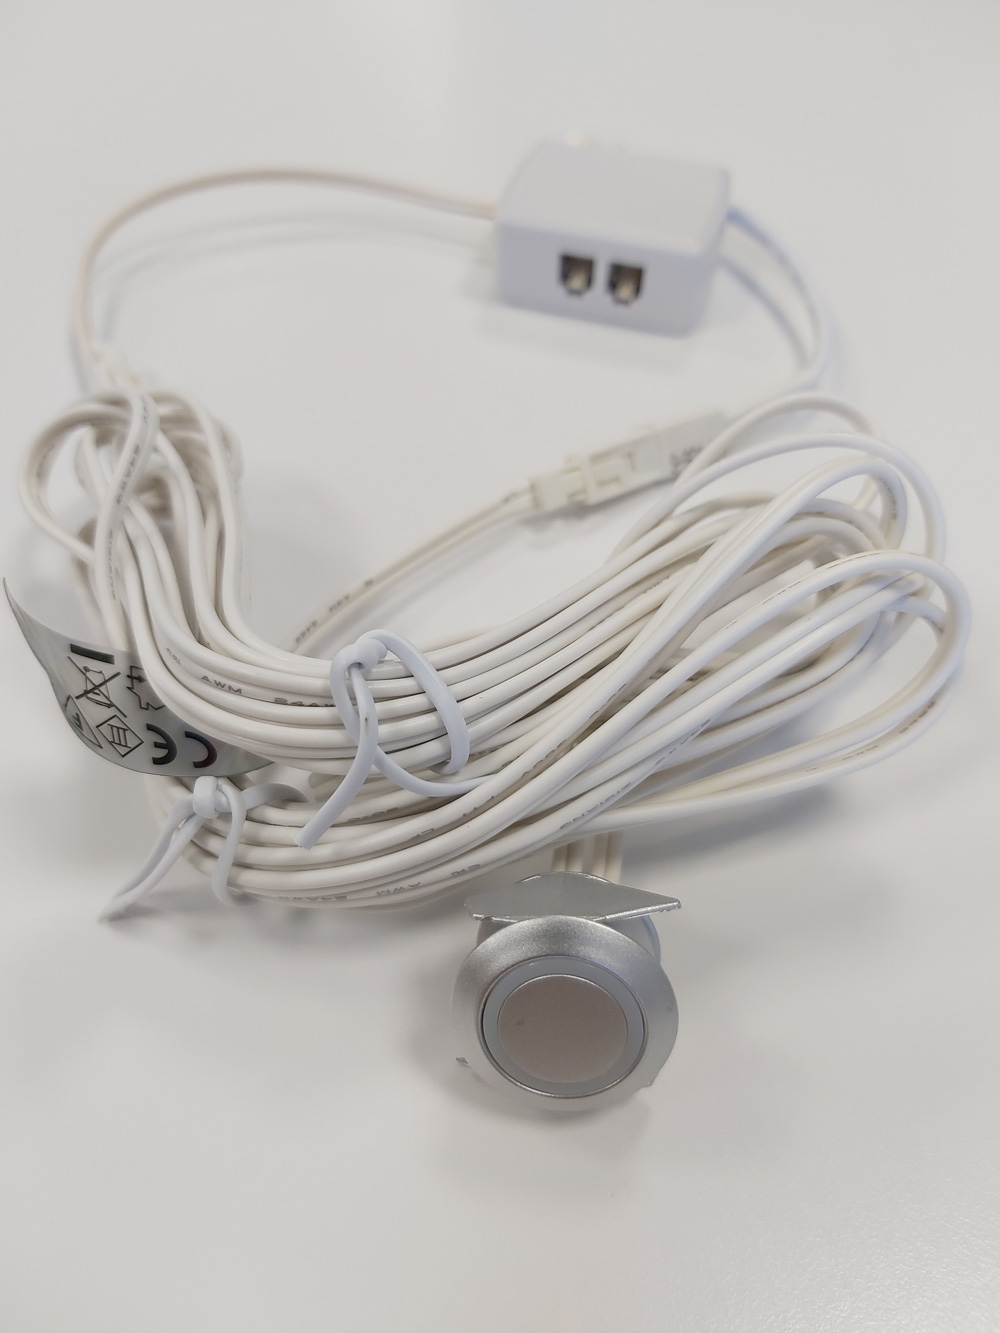 Выключатель Mini Touch Dimmer 12В, разъем Miniplug, распр. кор. на 4 гнезда d20x2мм